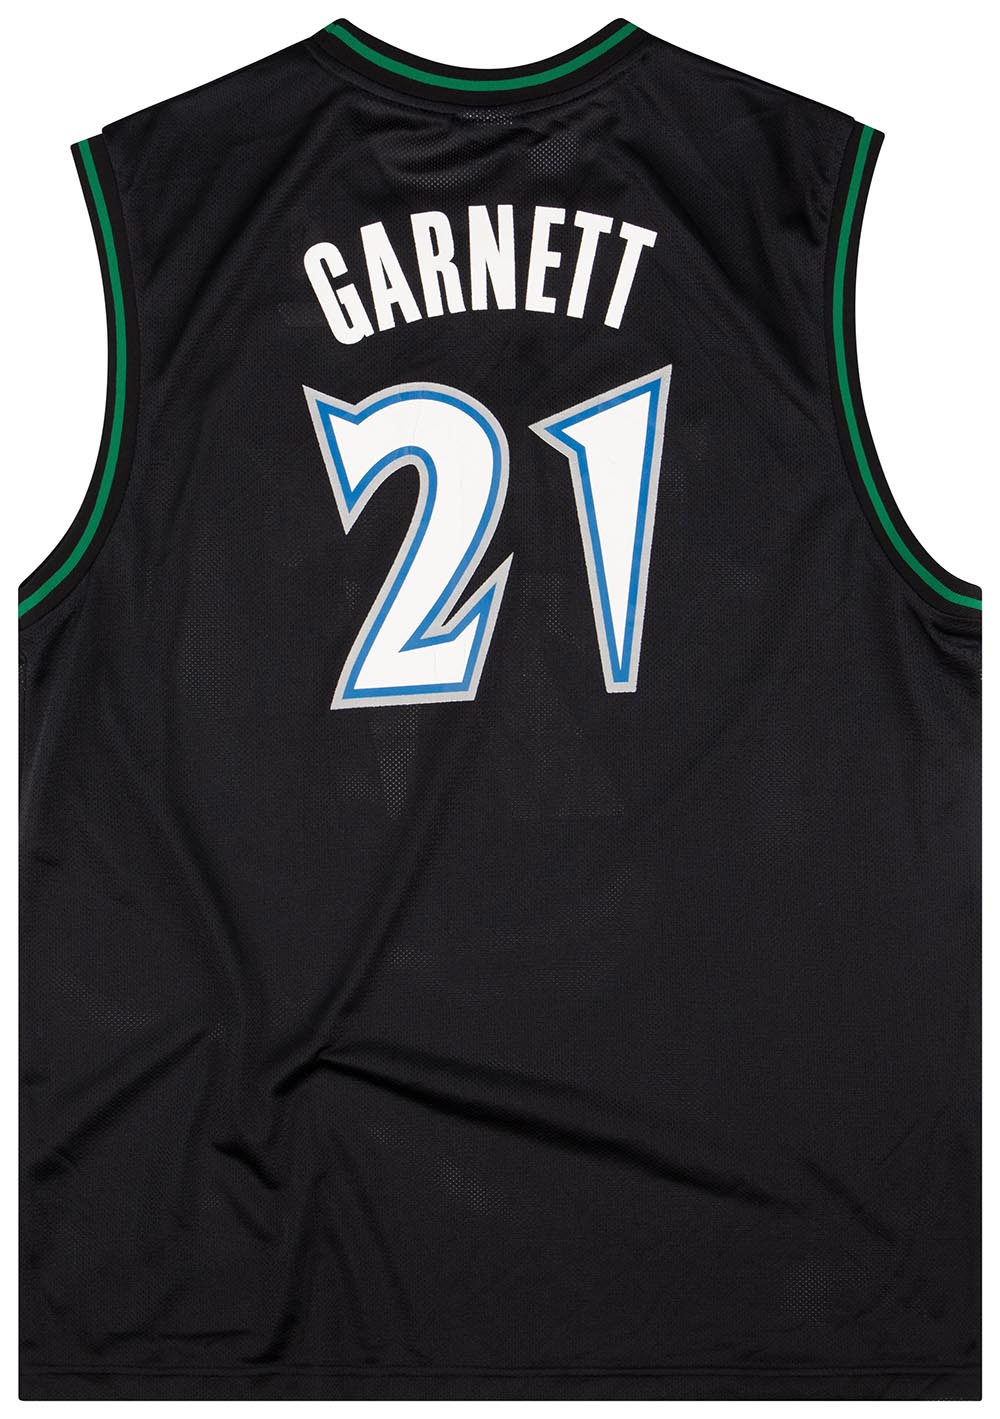 Kevin Garnett is back in the #21 Timberwolves jersey : r/nba